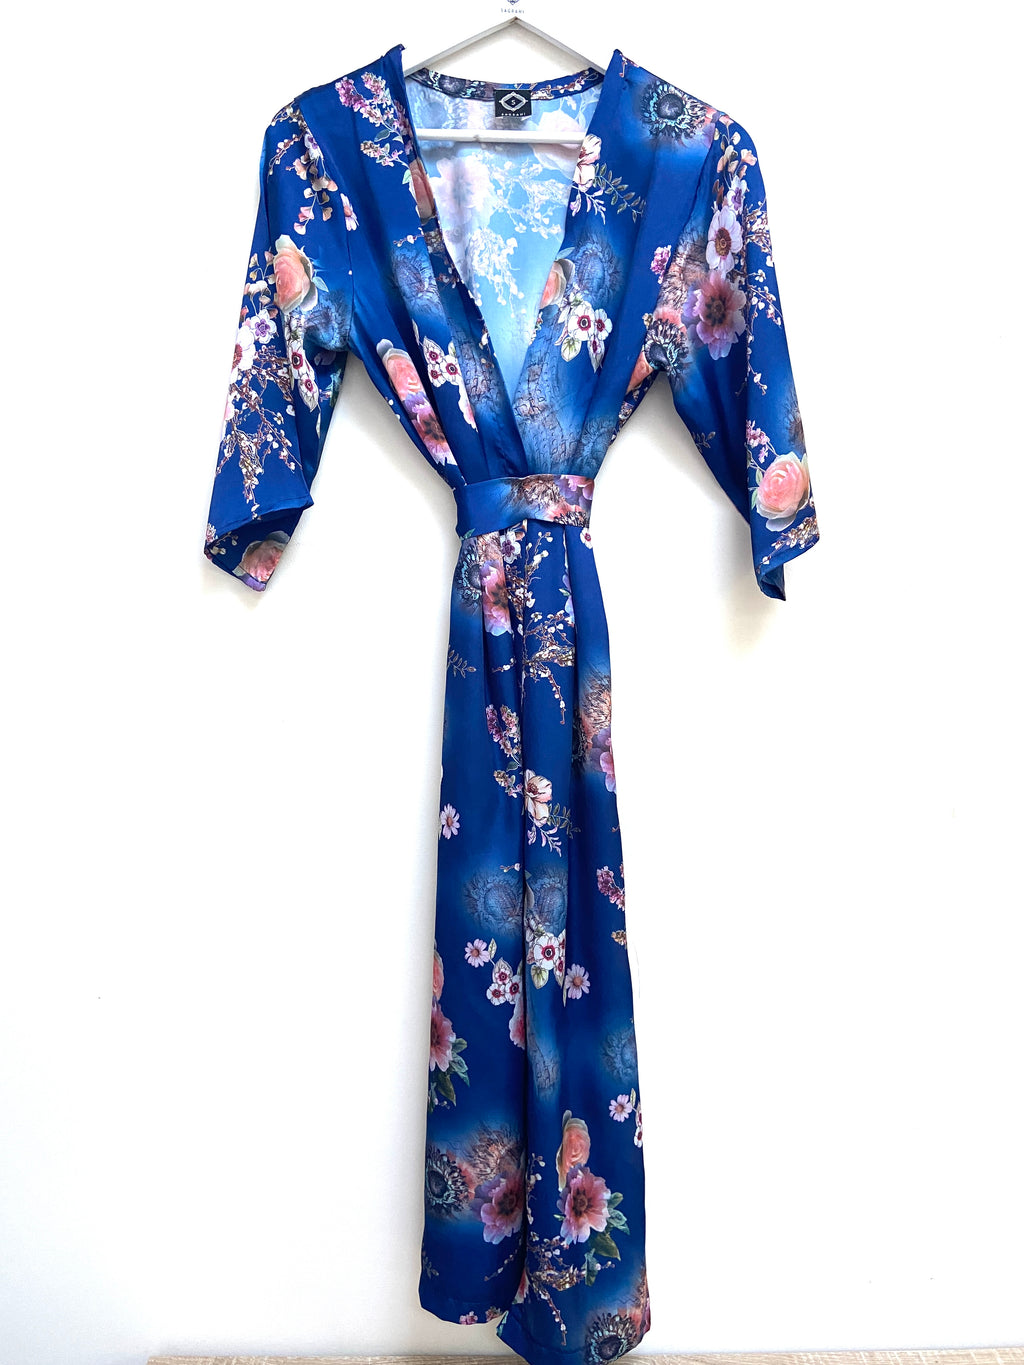 Royal blue and pink rose Kimono